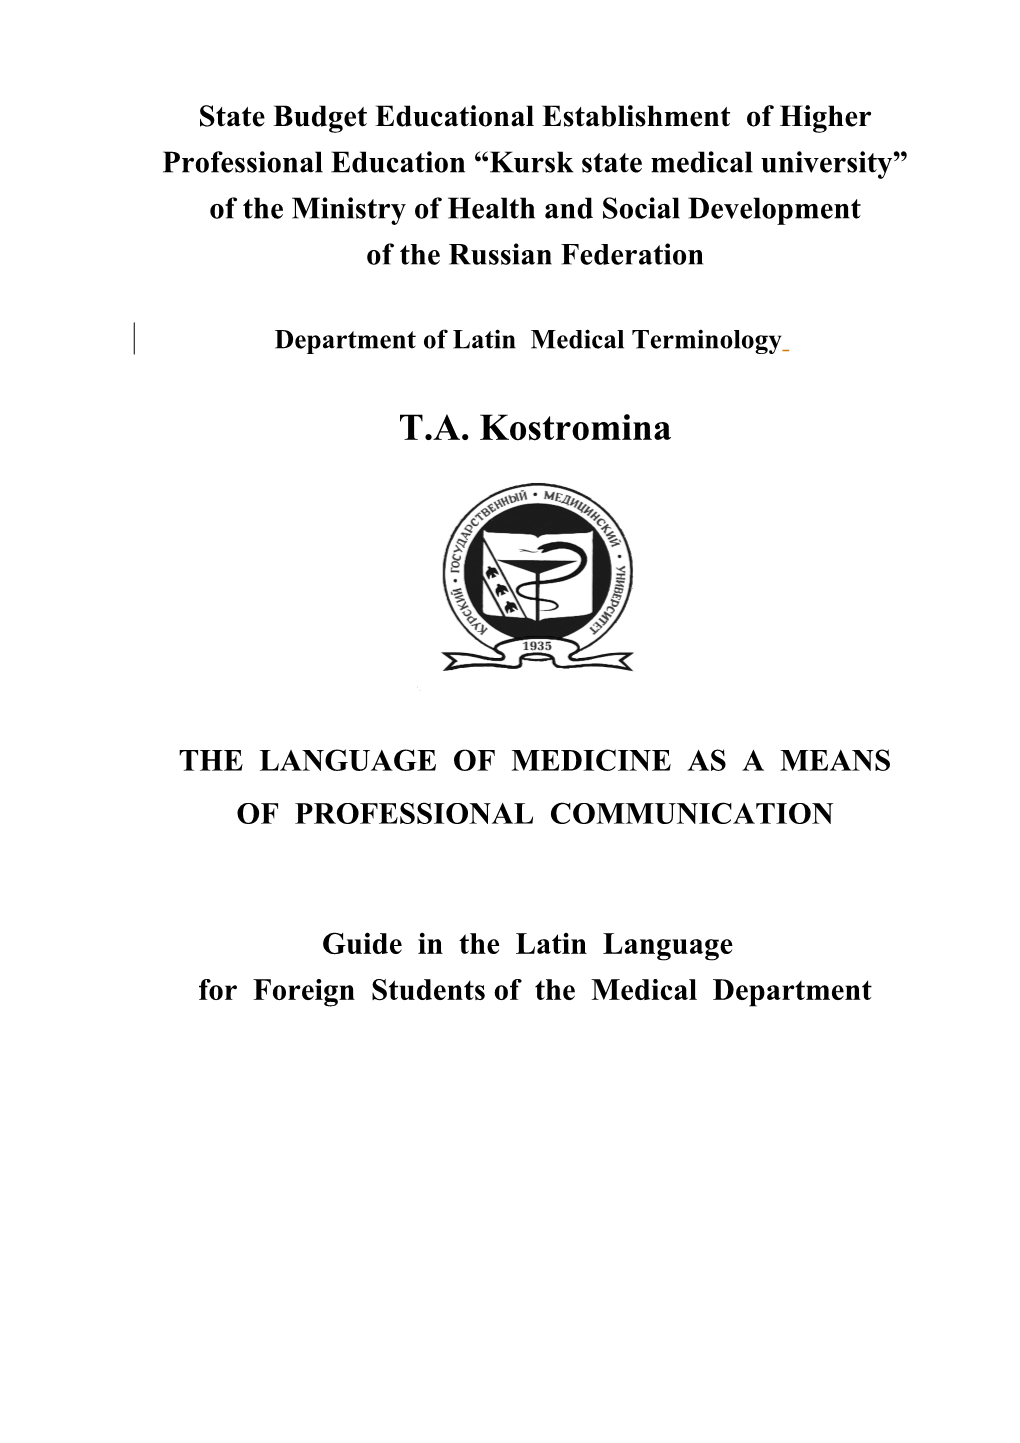 State Budget Educational Establishment of Higher Professional Education Kursk State Medical